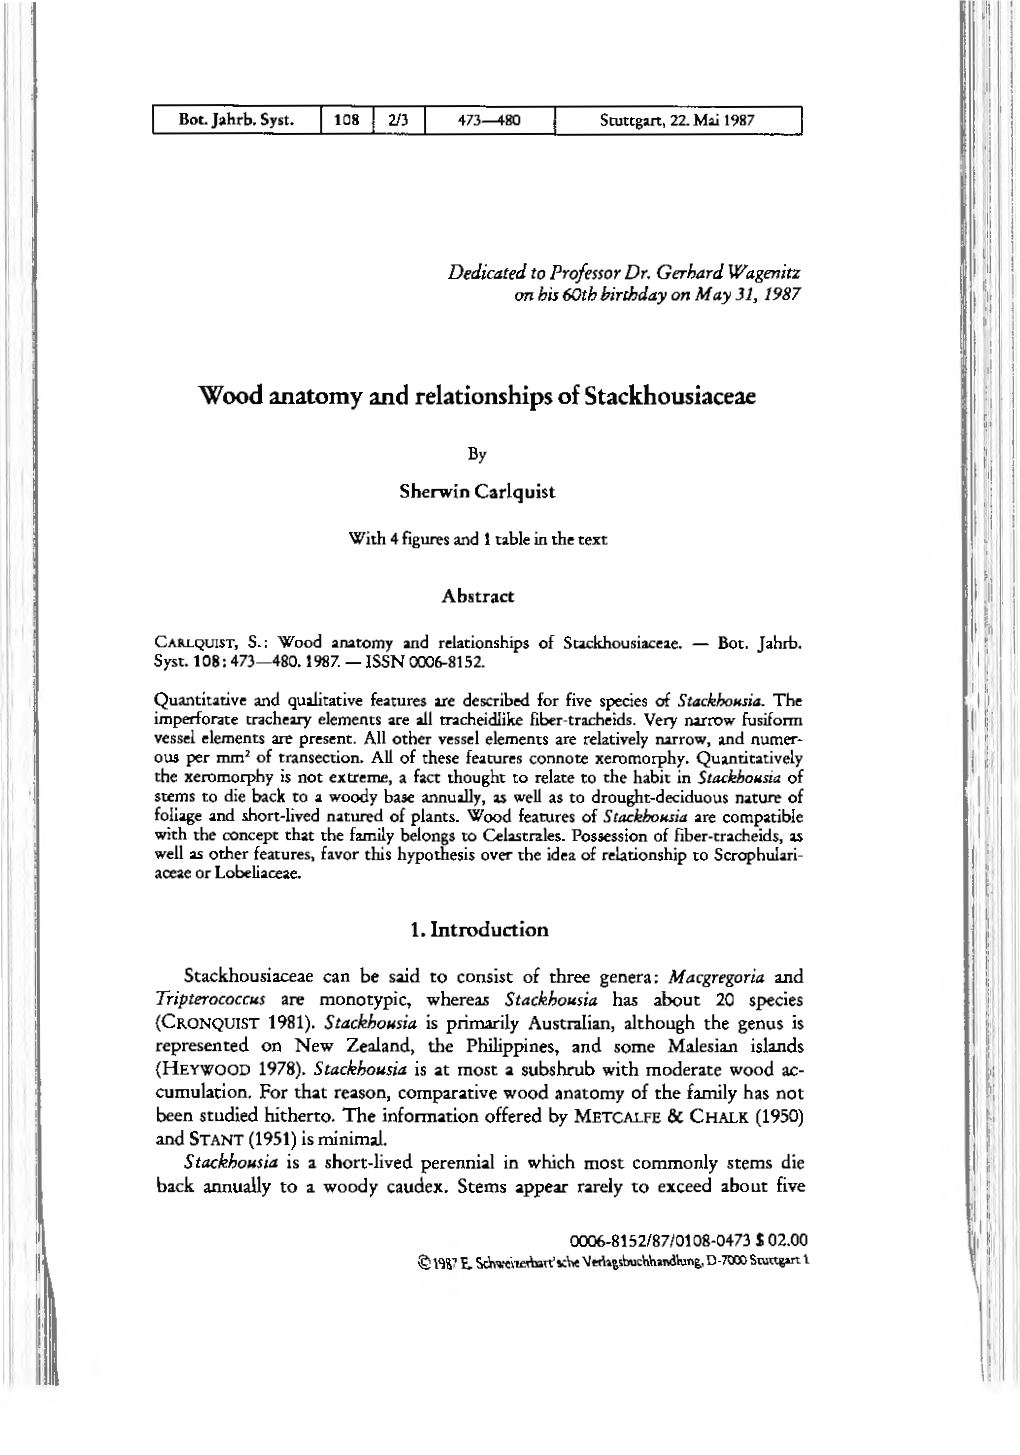 Wood Anatomy and Relationships of Stackhousiaceae I